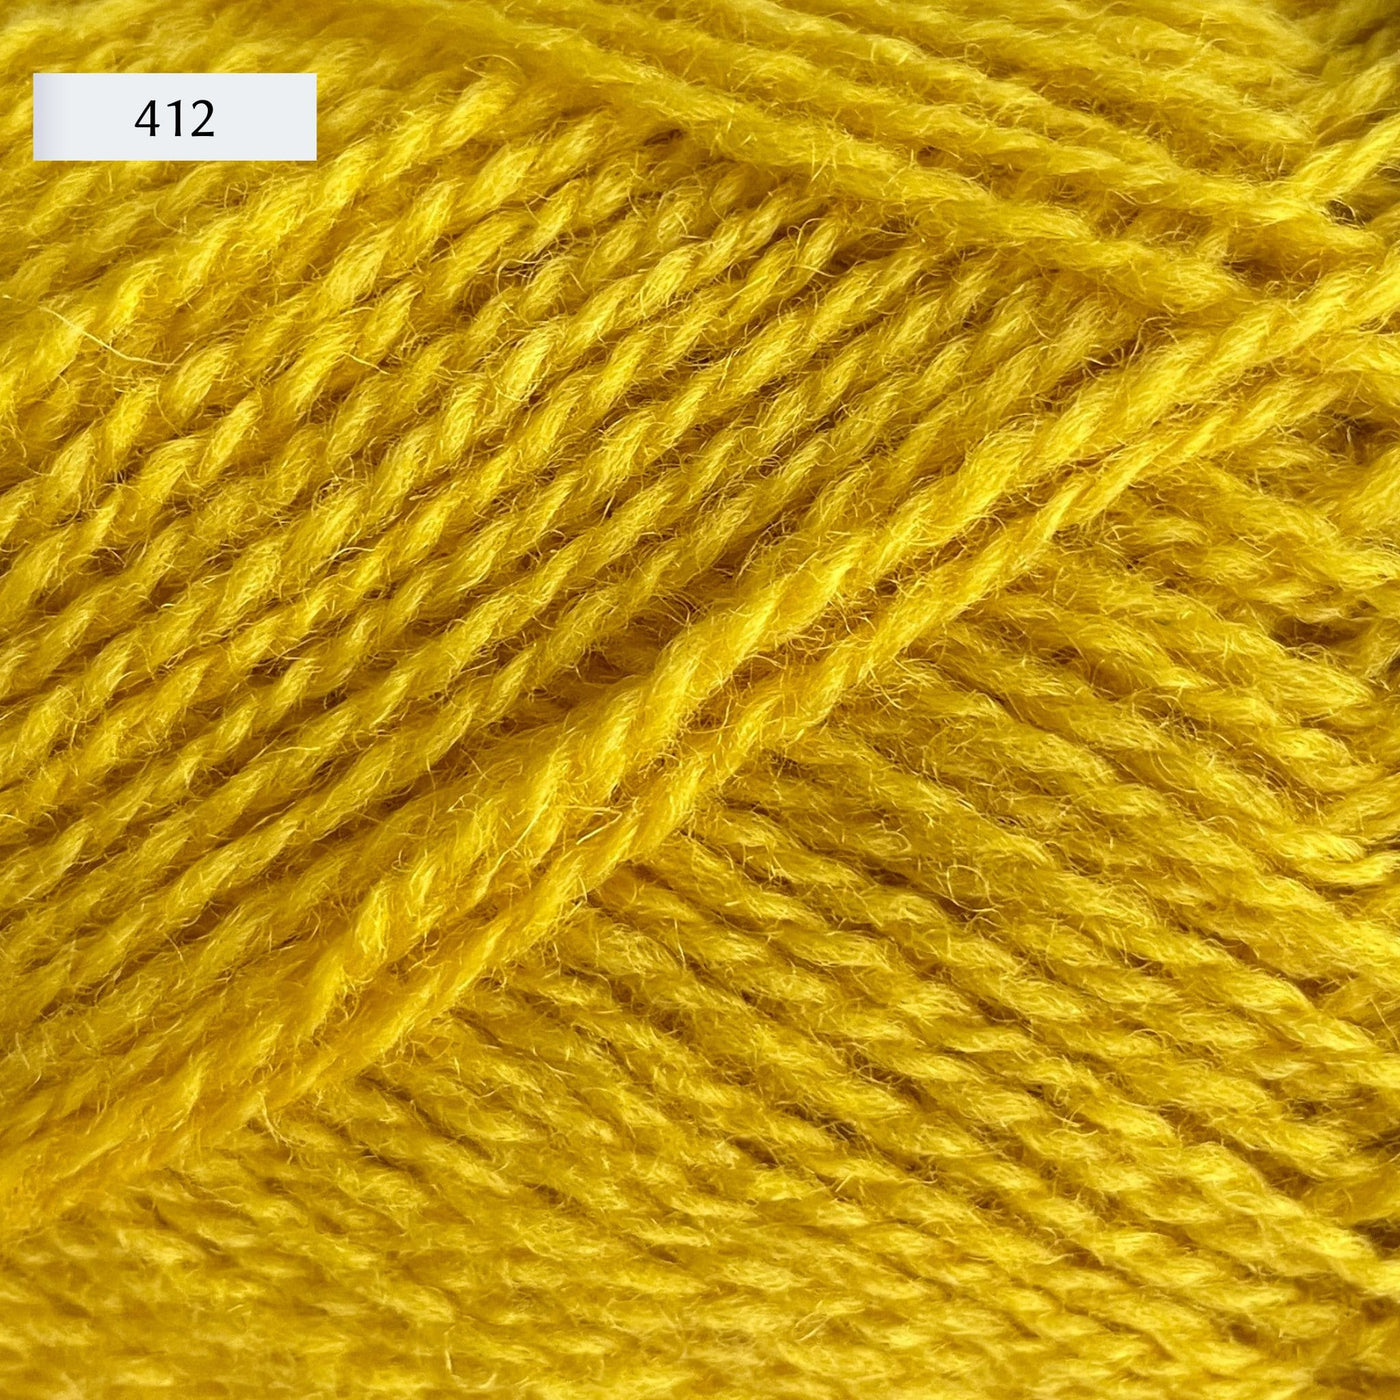 Rauma Finullgarn, a fingering/sport weight yarn, in color 412, a primary yellow